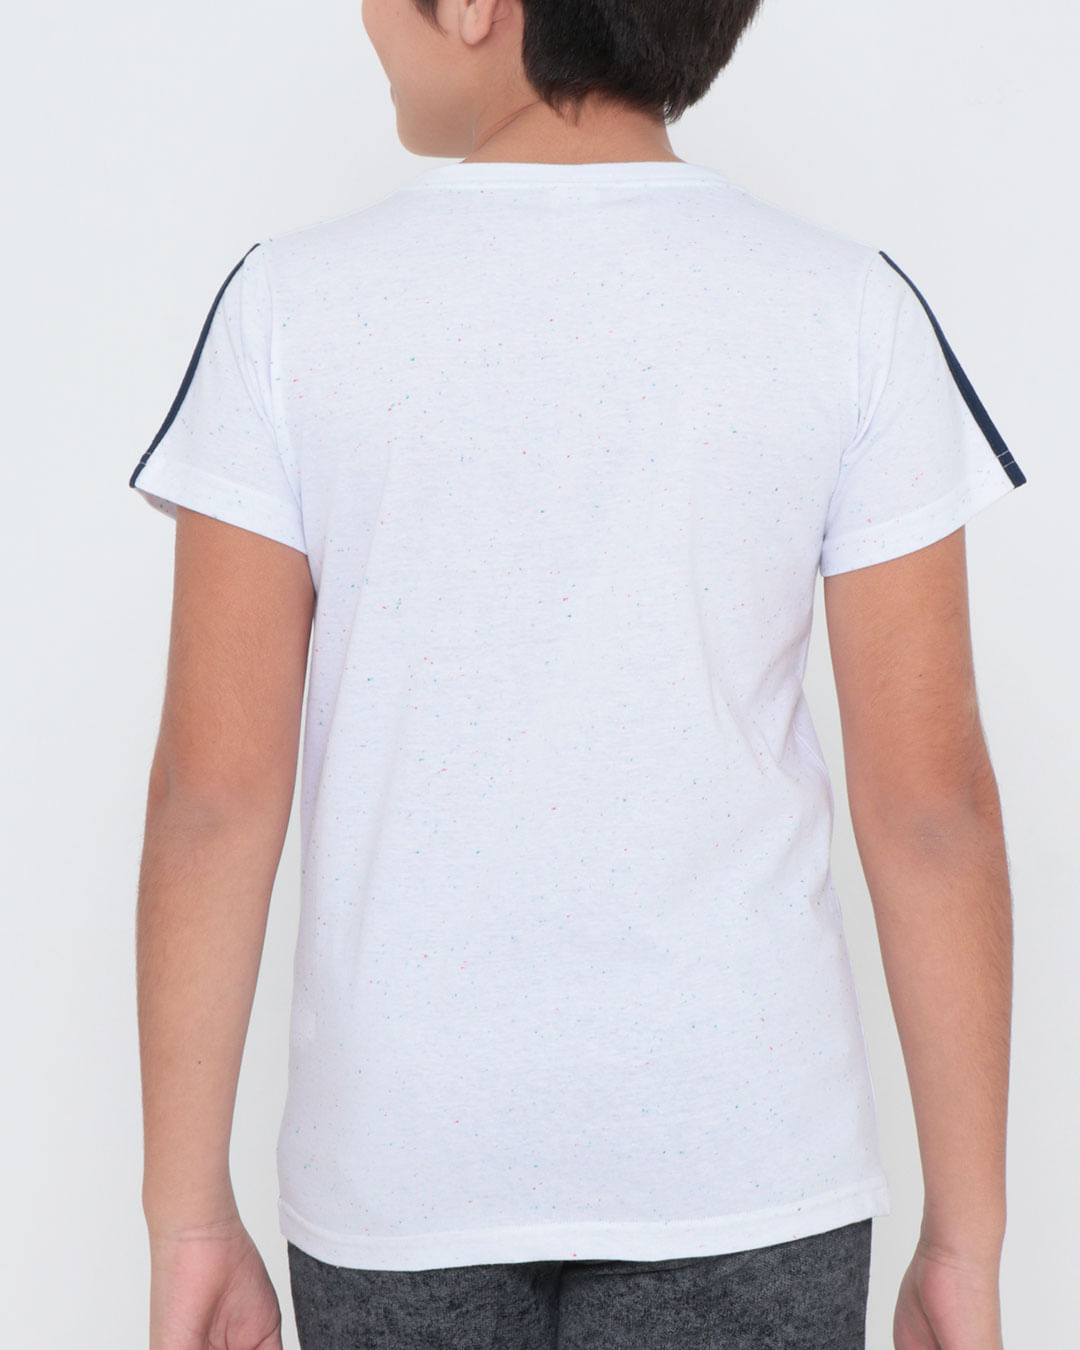 Camiseta-Juvenil-Botone-Estampa-Praia-Branca